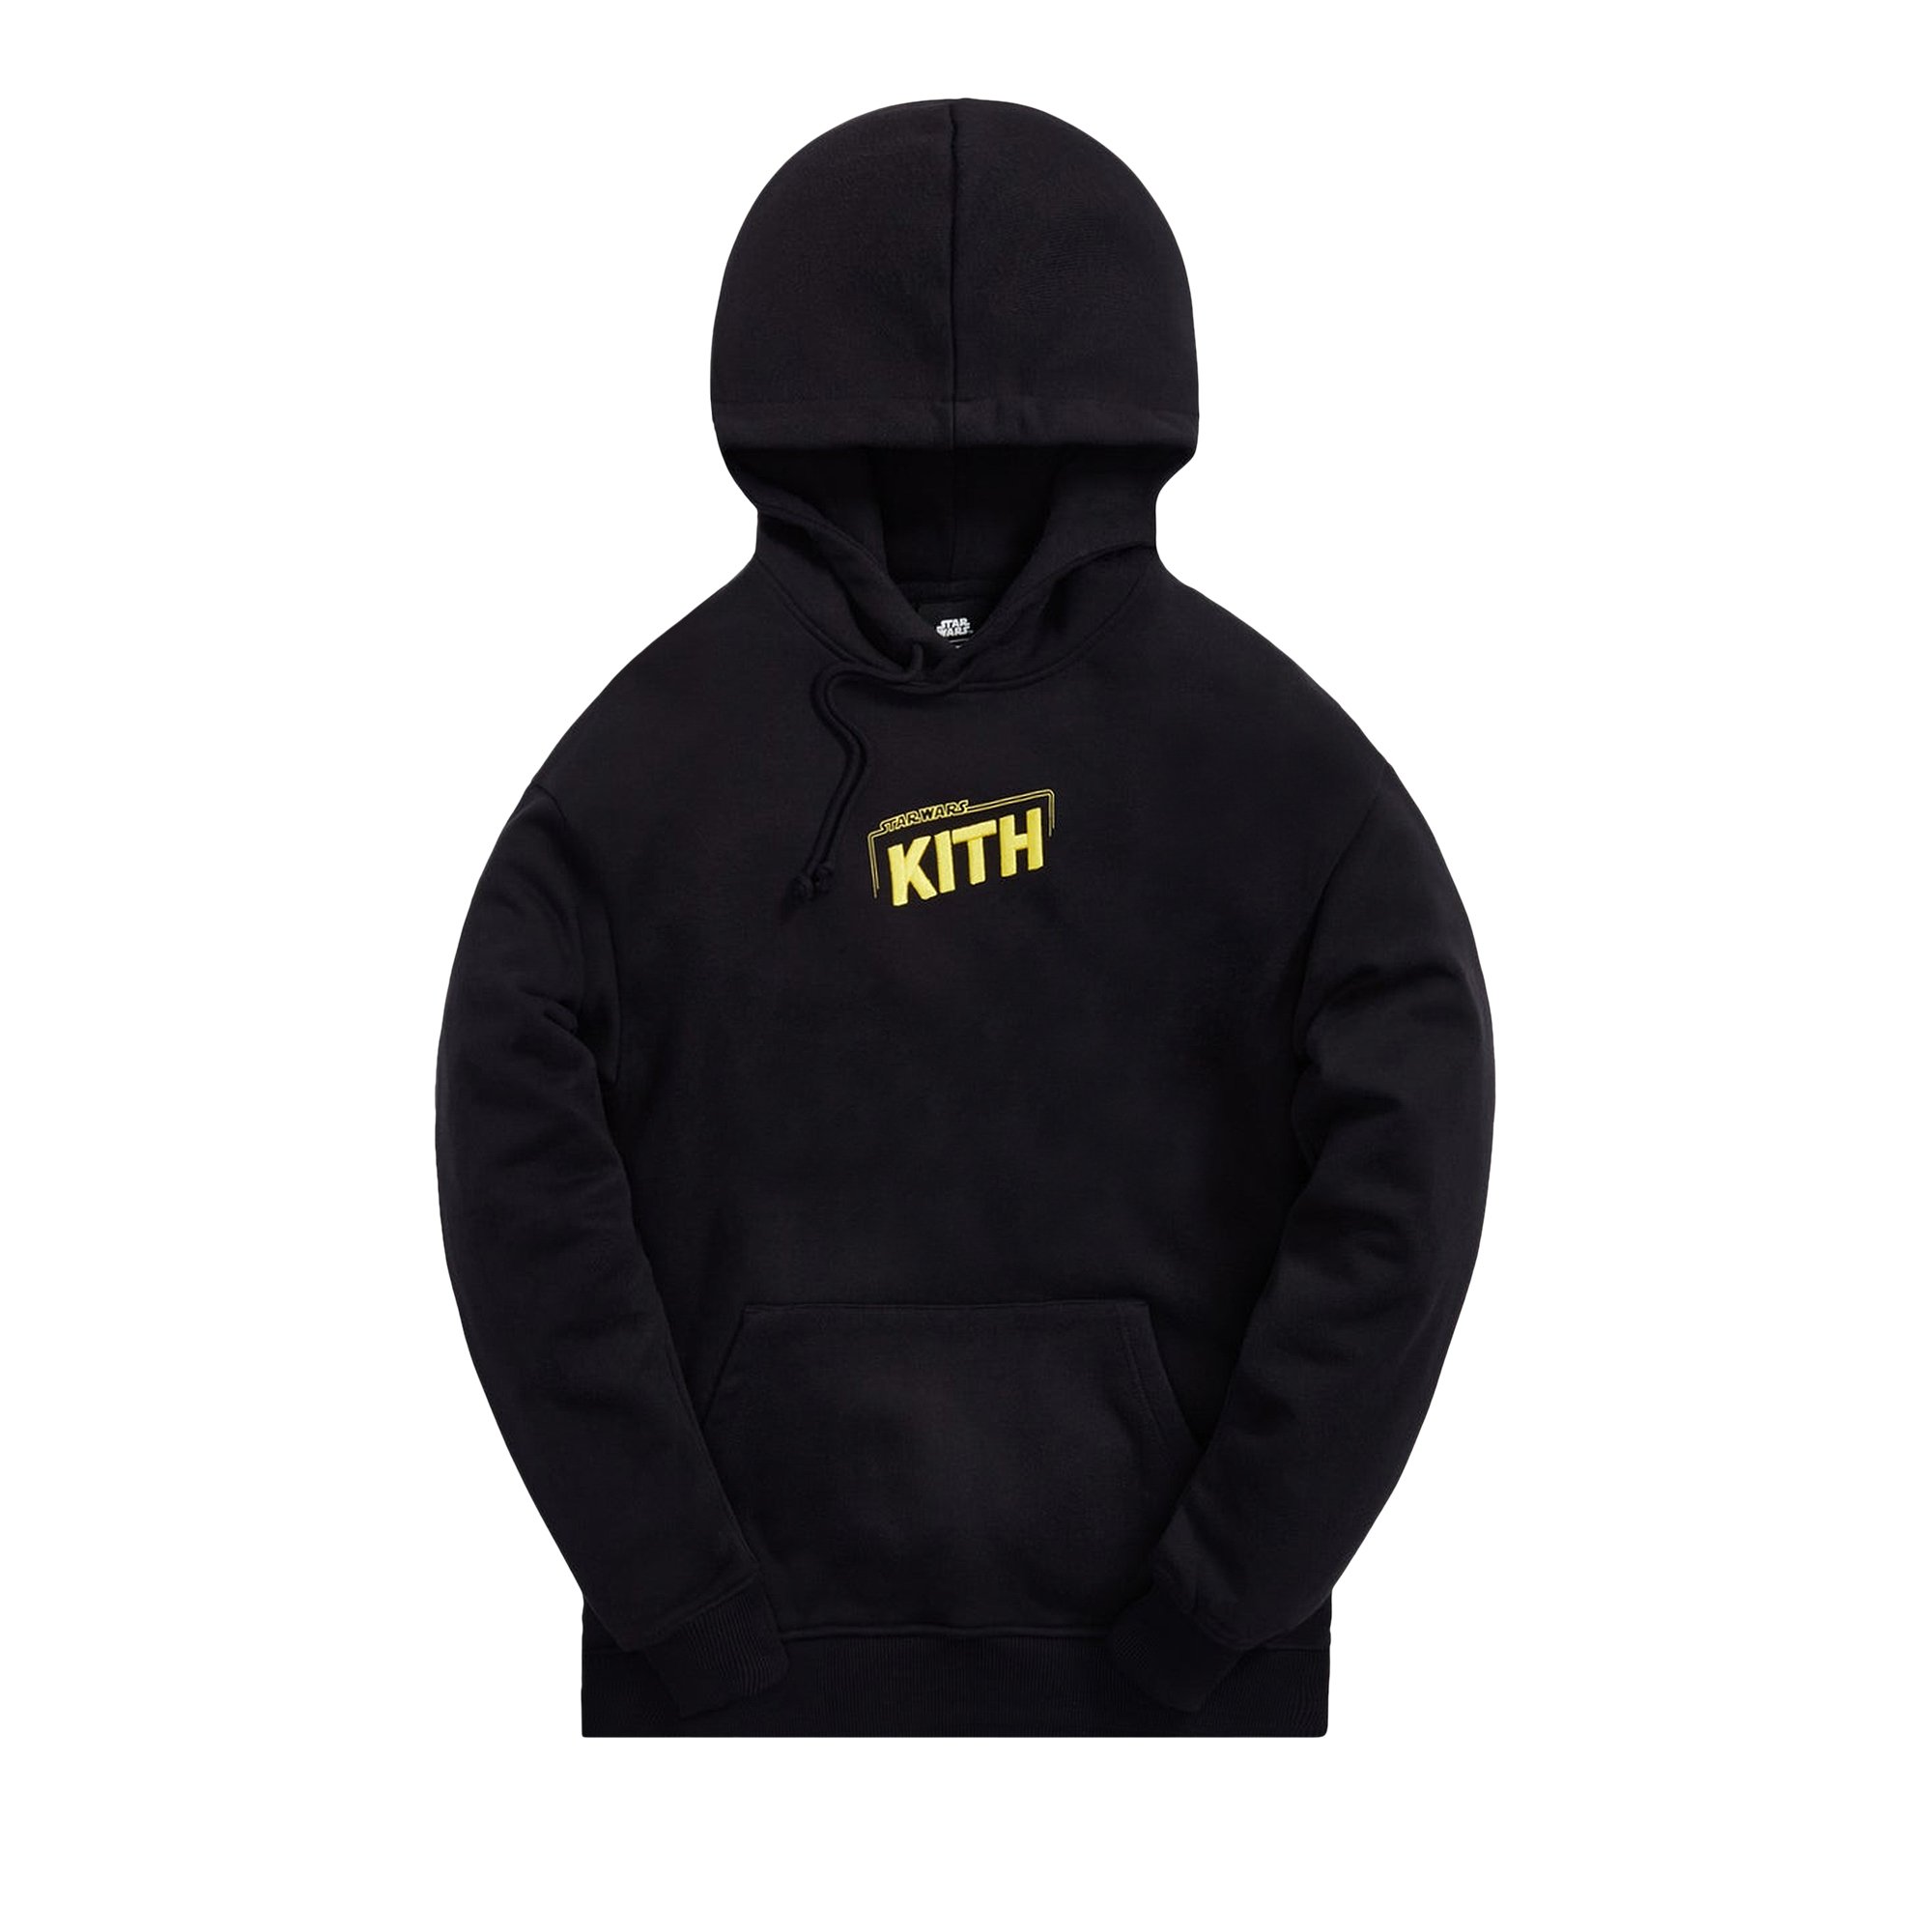 Buy Kith For Star Wars Credits Hoodie 'Black' - KHM030216 001 | GOAT